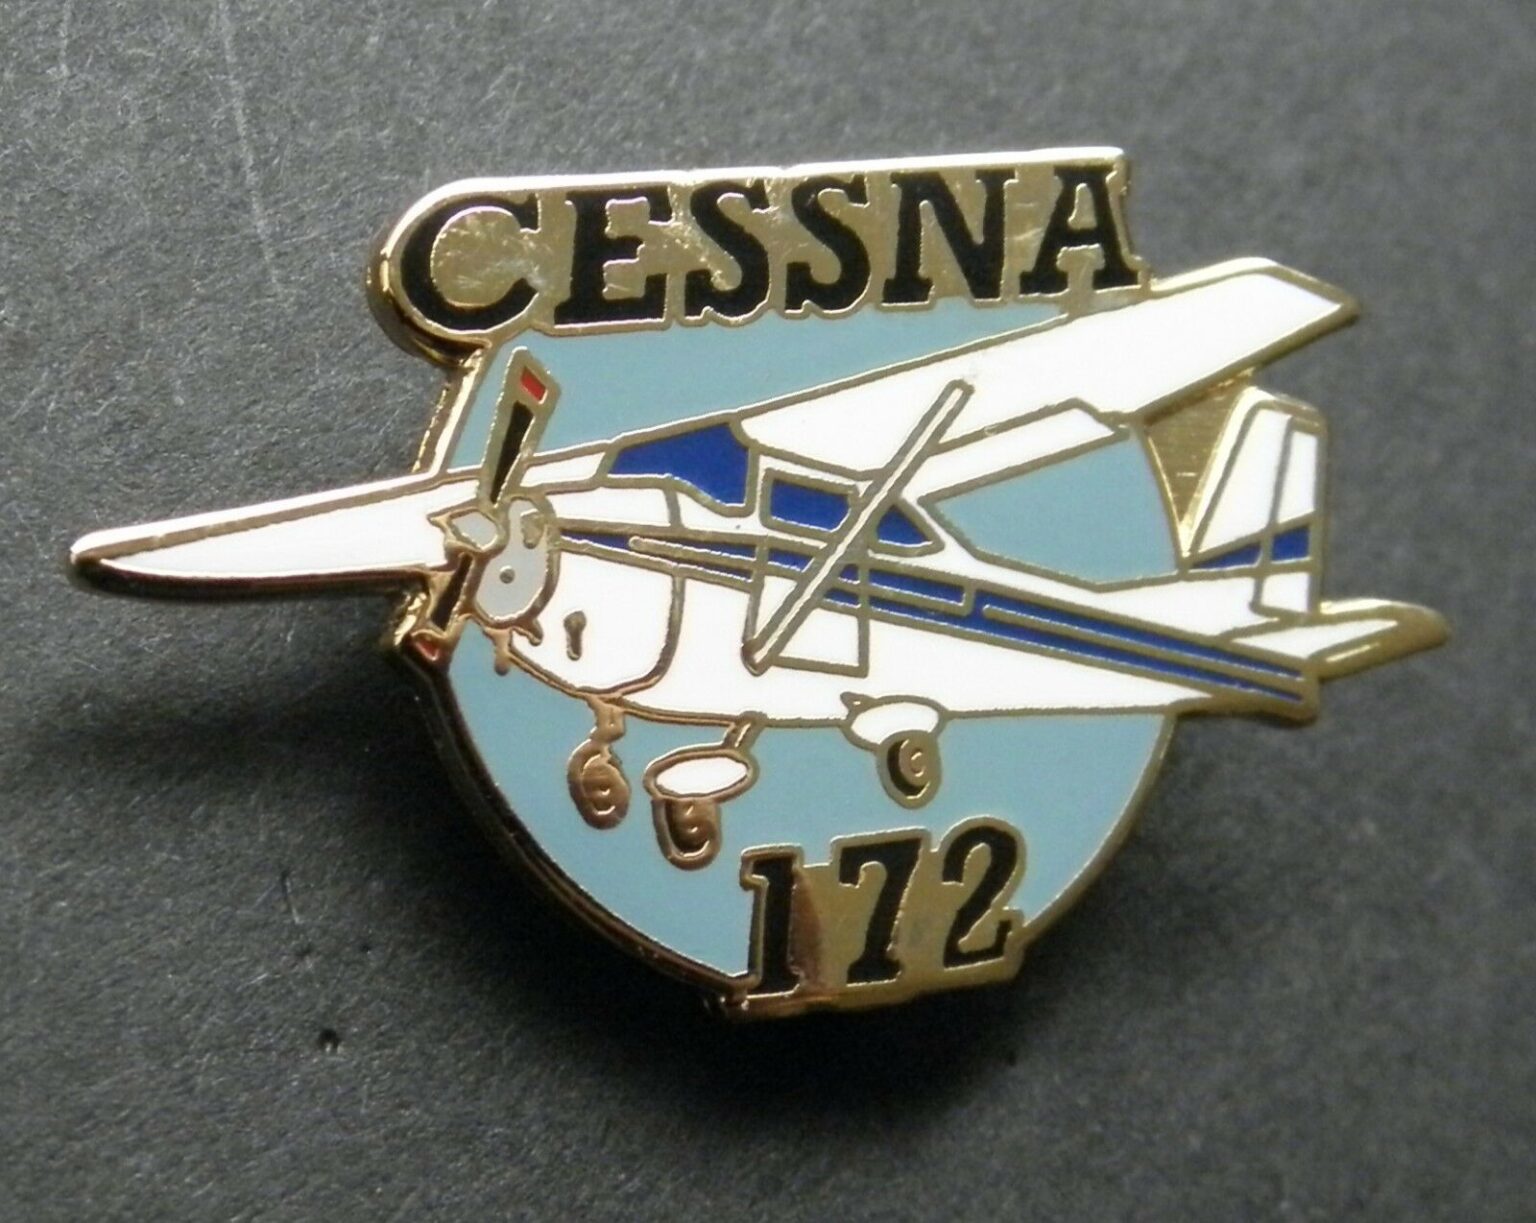 Cessna 172 Plane Civil Aircraft Lapel Pin Badge 11 Inches Cordon